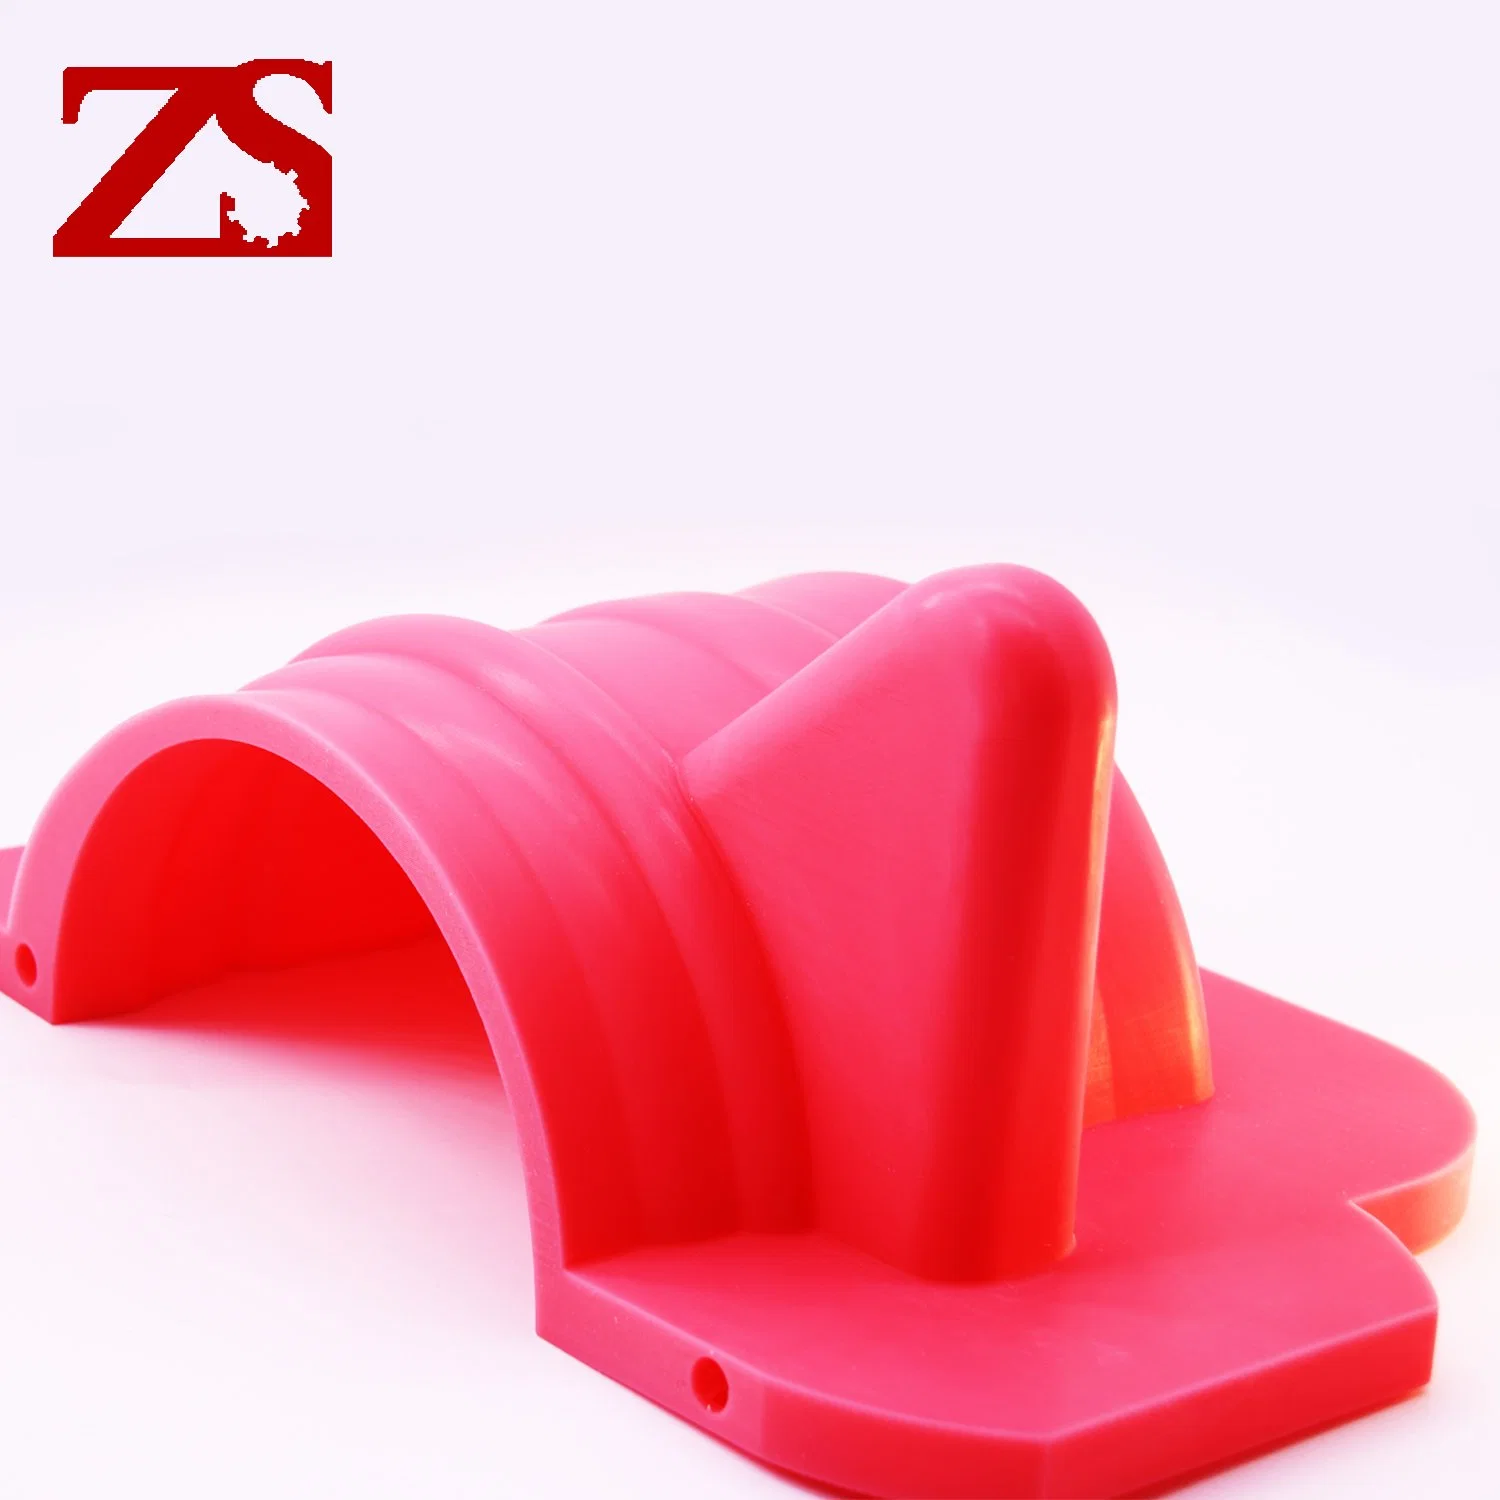 High Accuracy Industrial China Zs SLA 3D Printer Printing Rapid Prototype